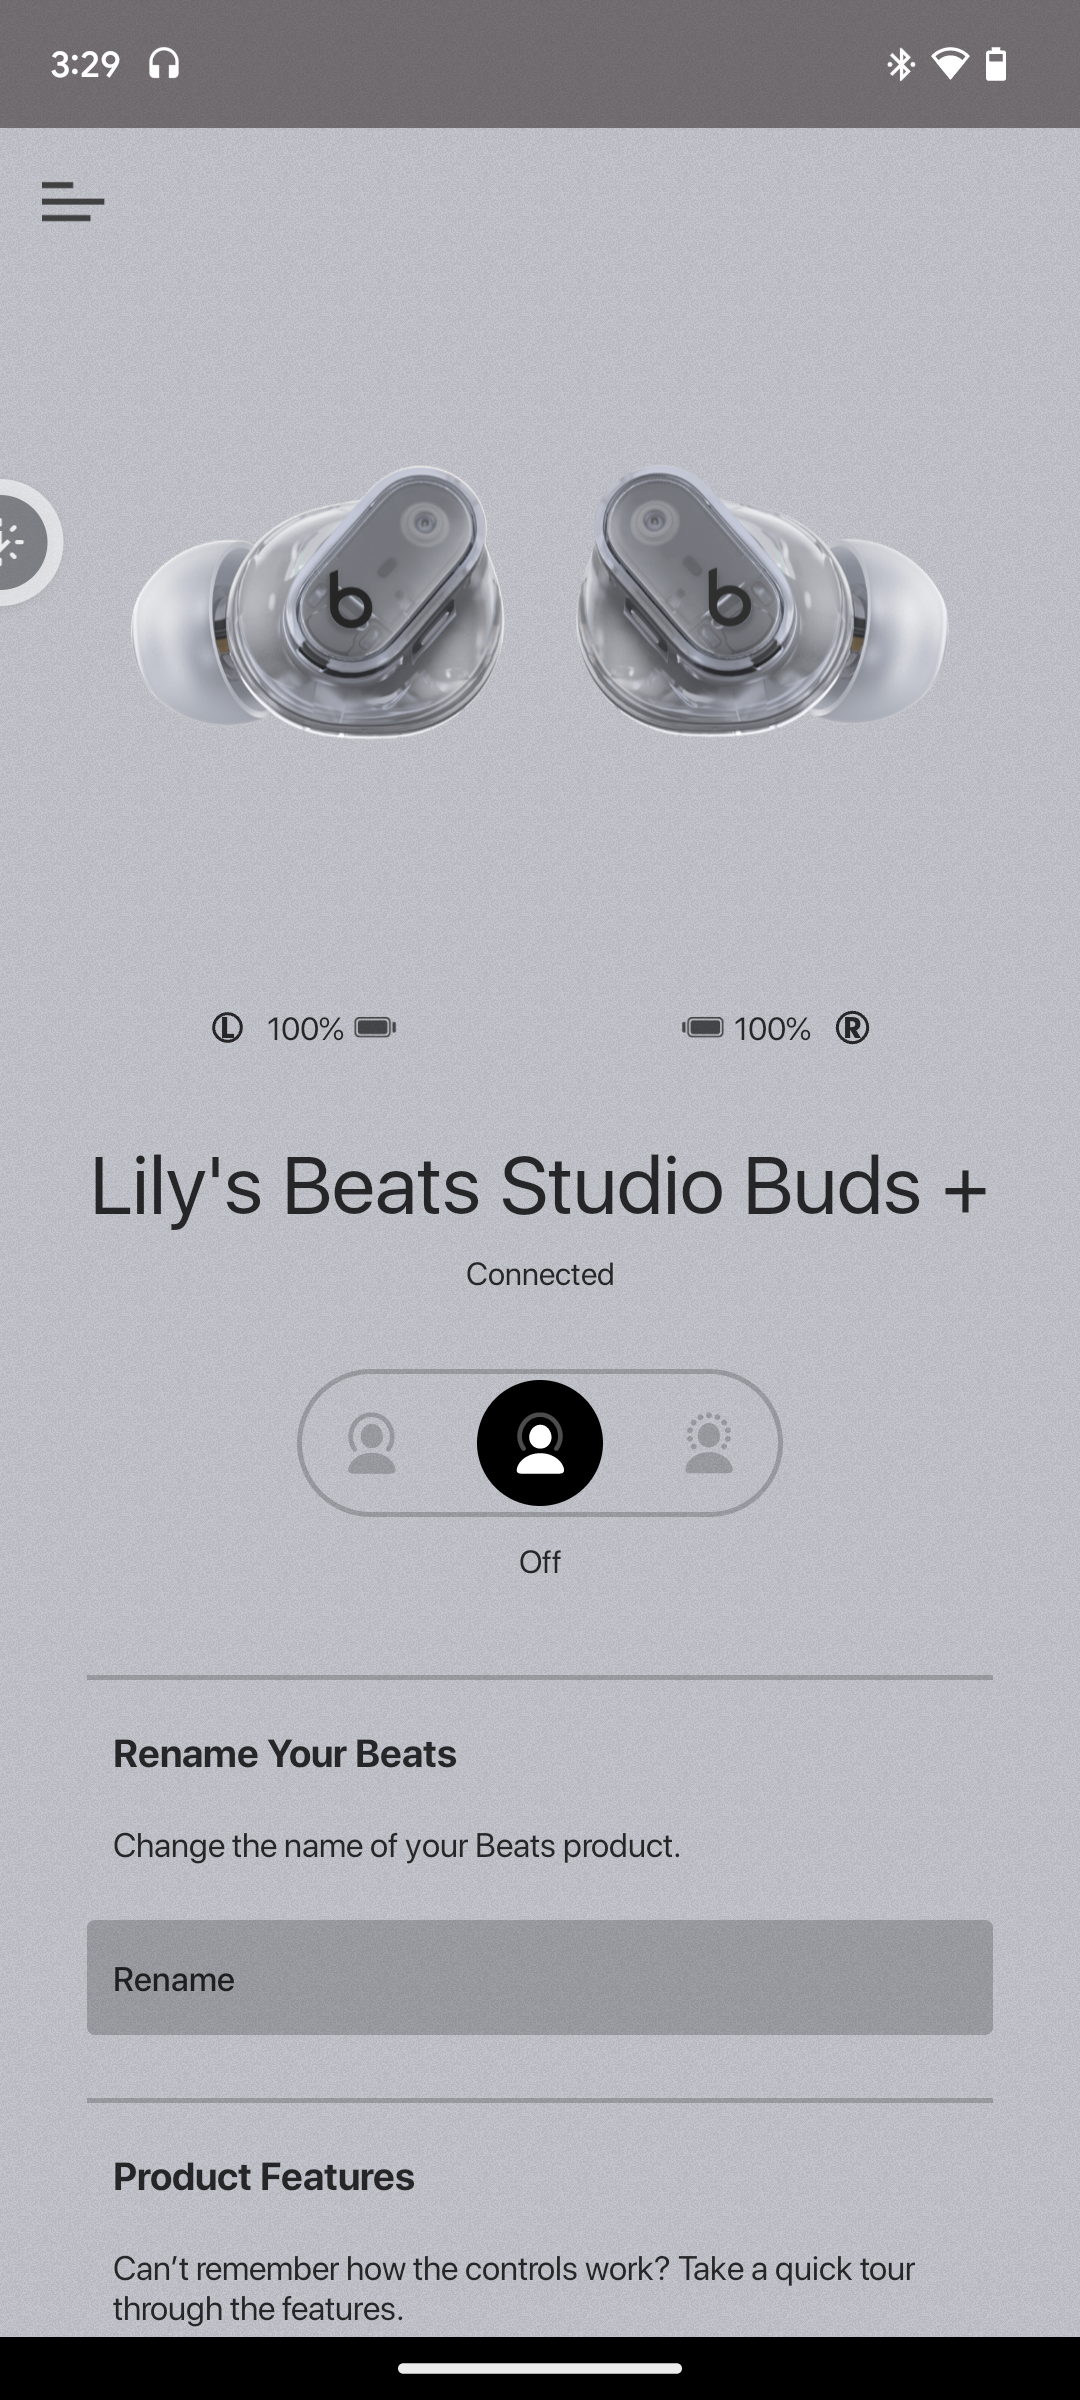 The Beats app's dashboard.